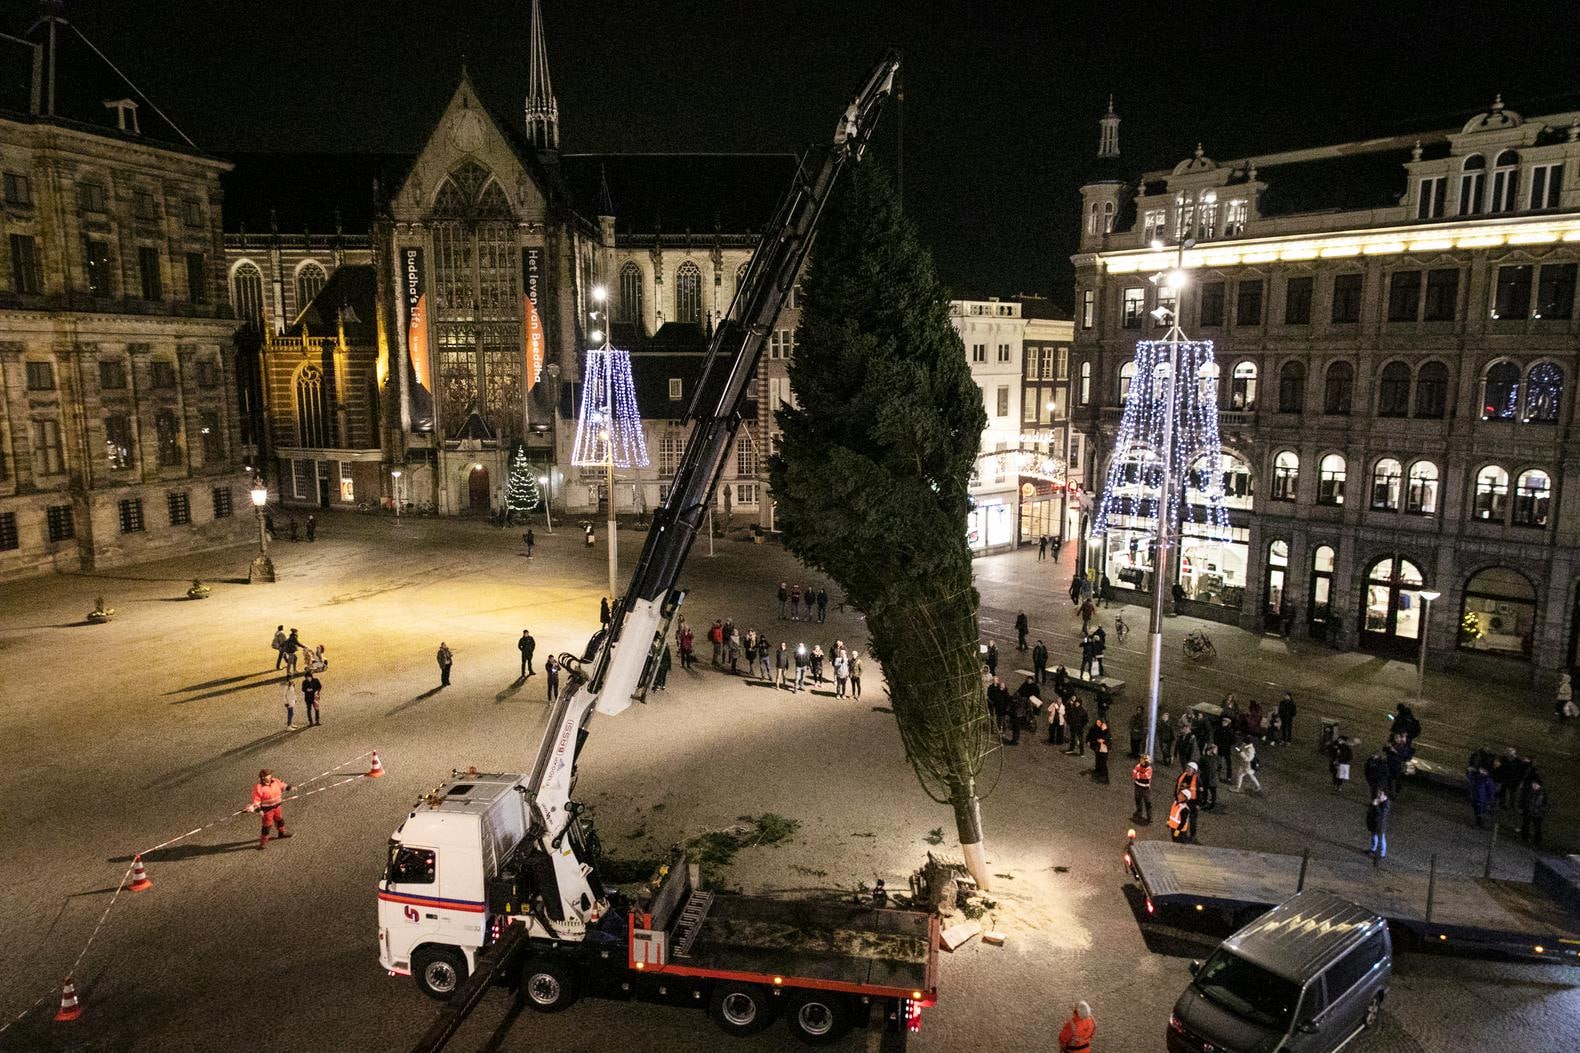 Amsterdams belangrijkste kerstboom is er weer